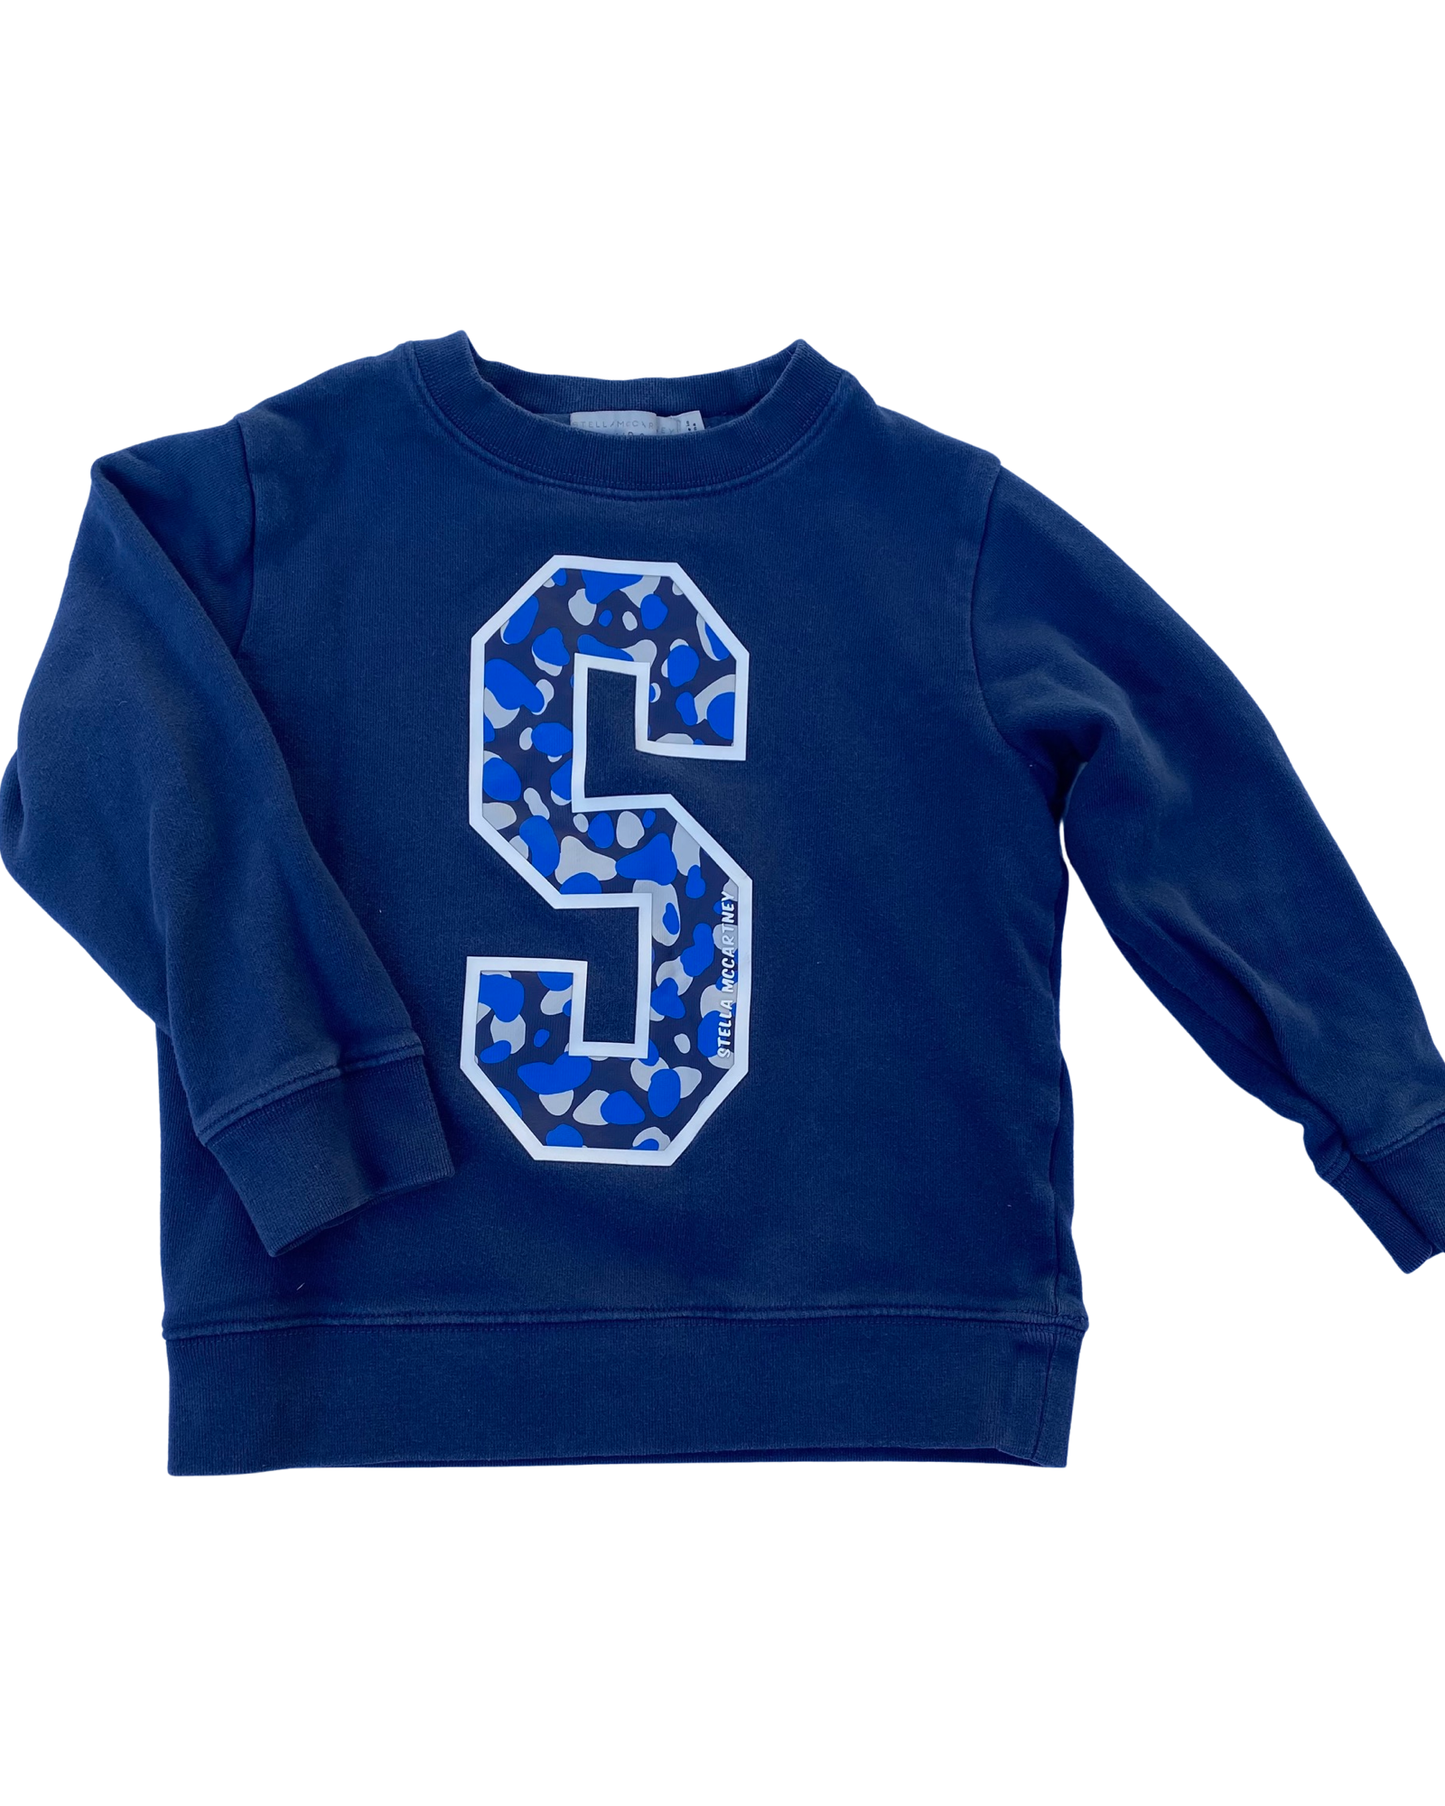 Stella McCartney S sweatshirt (size 3-4yrs)